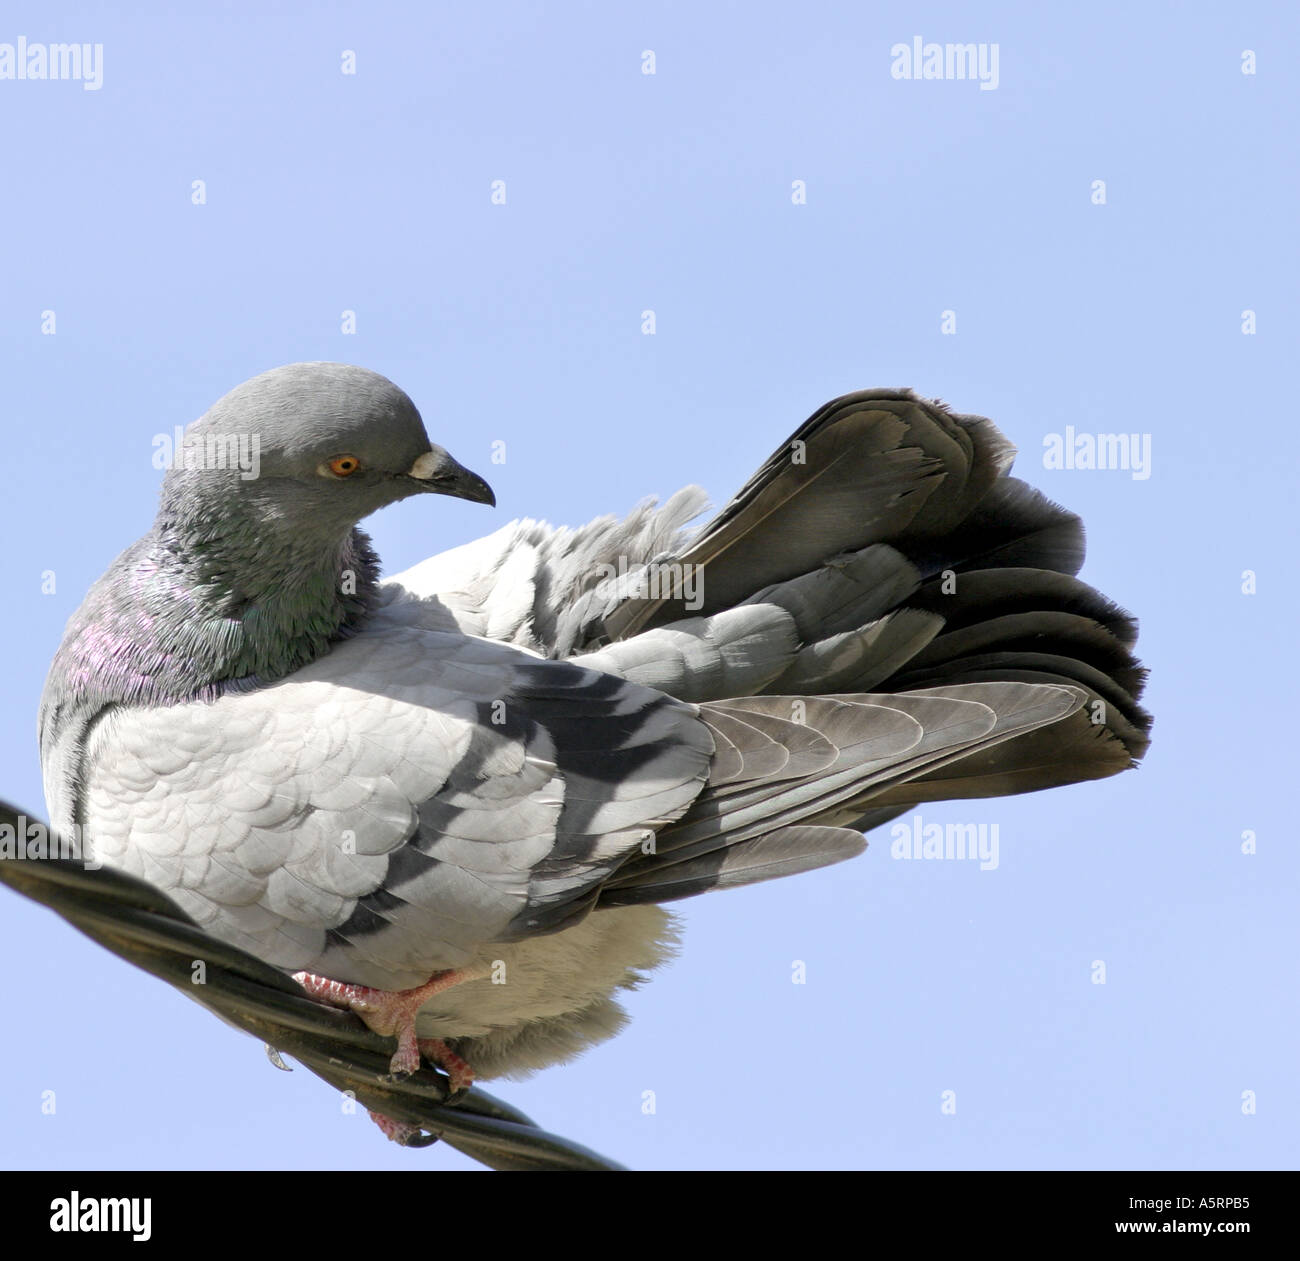 pigeon latin pipio -onis - LAROUSSE